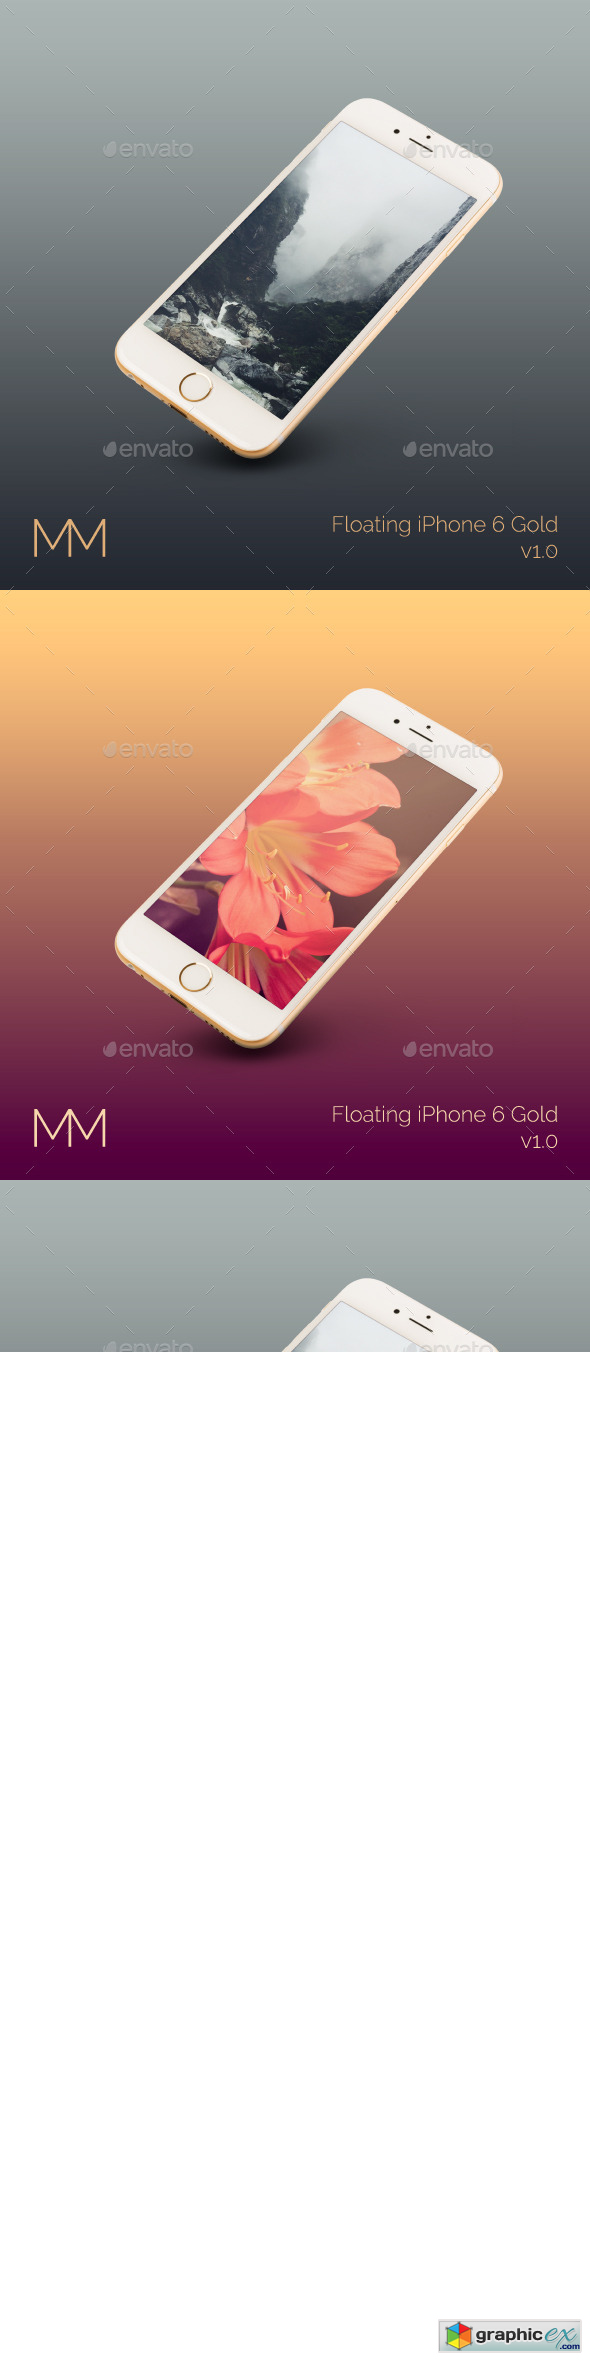 Floating iPhone 6 Gold MockUp